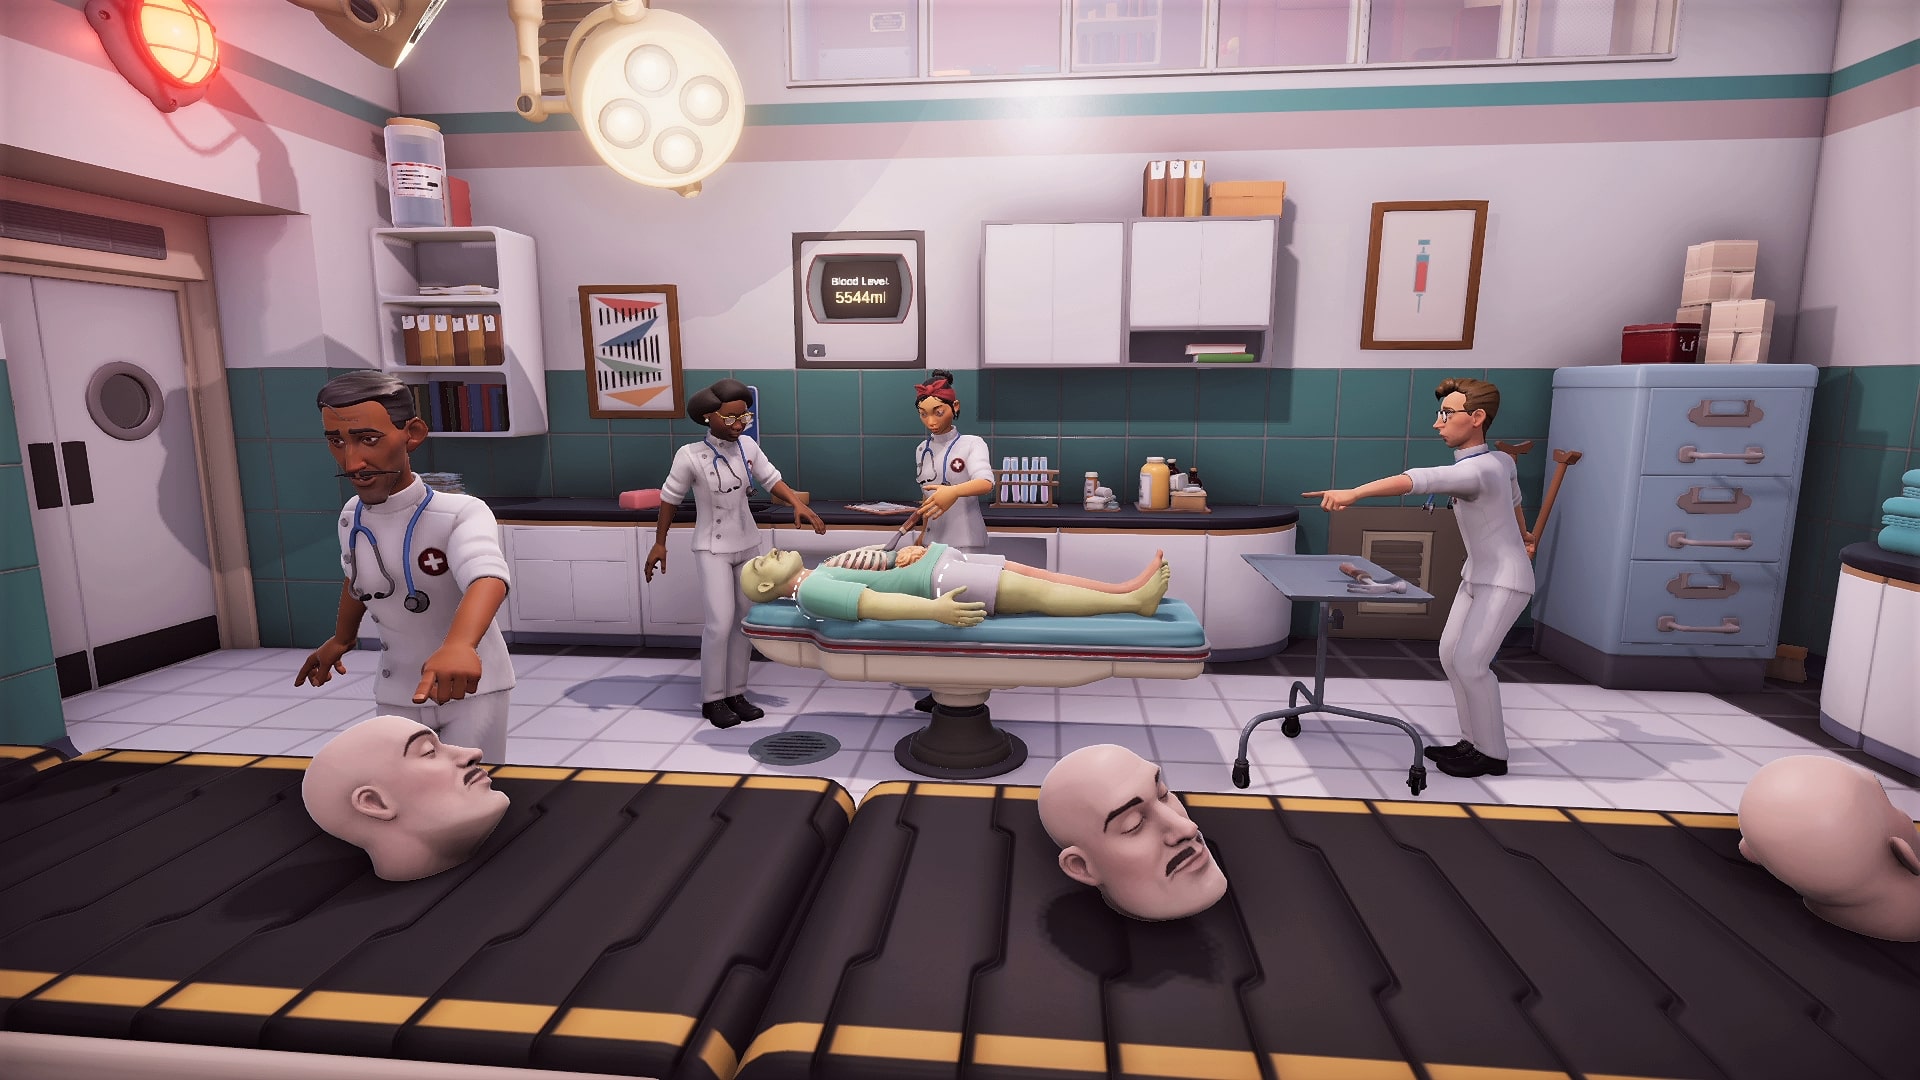 Surgeon simulator 2 screenshot 4 6